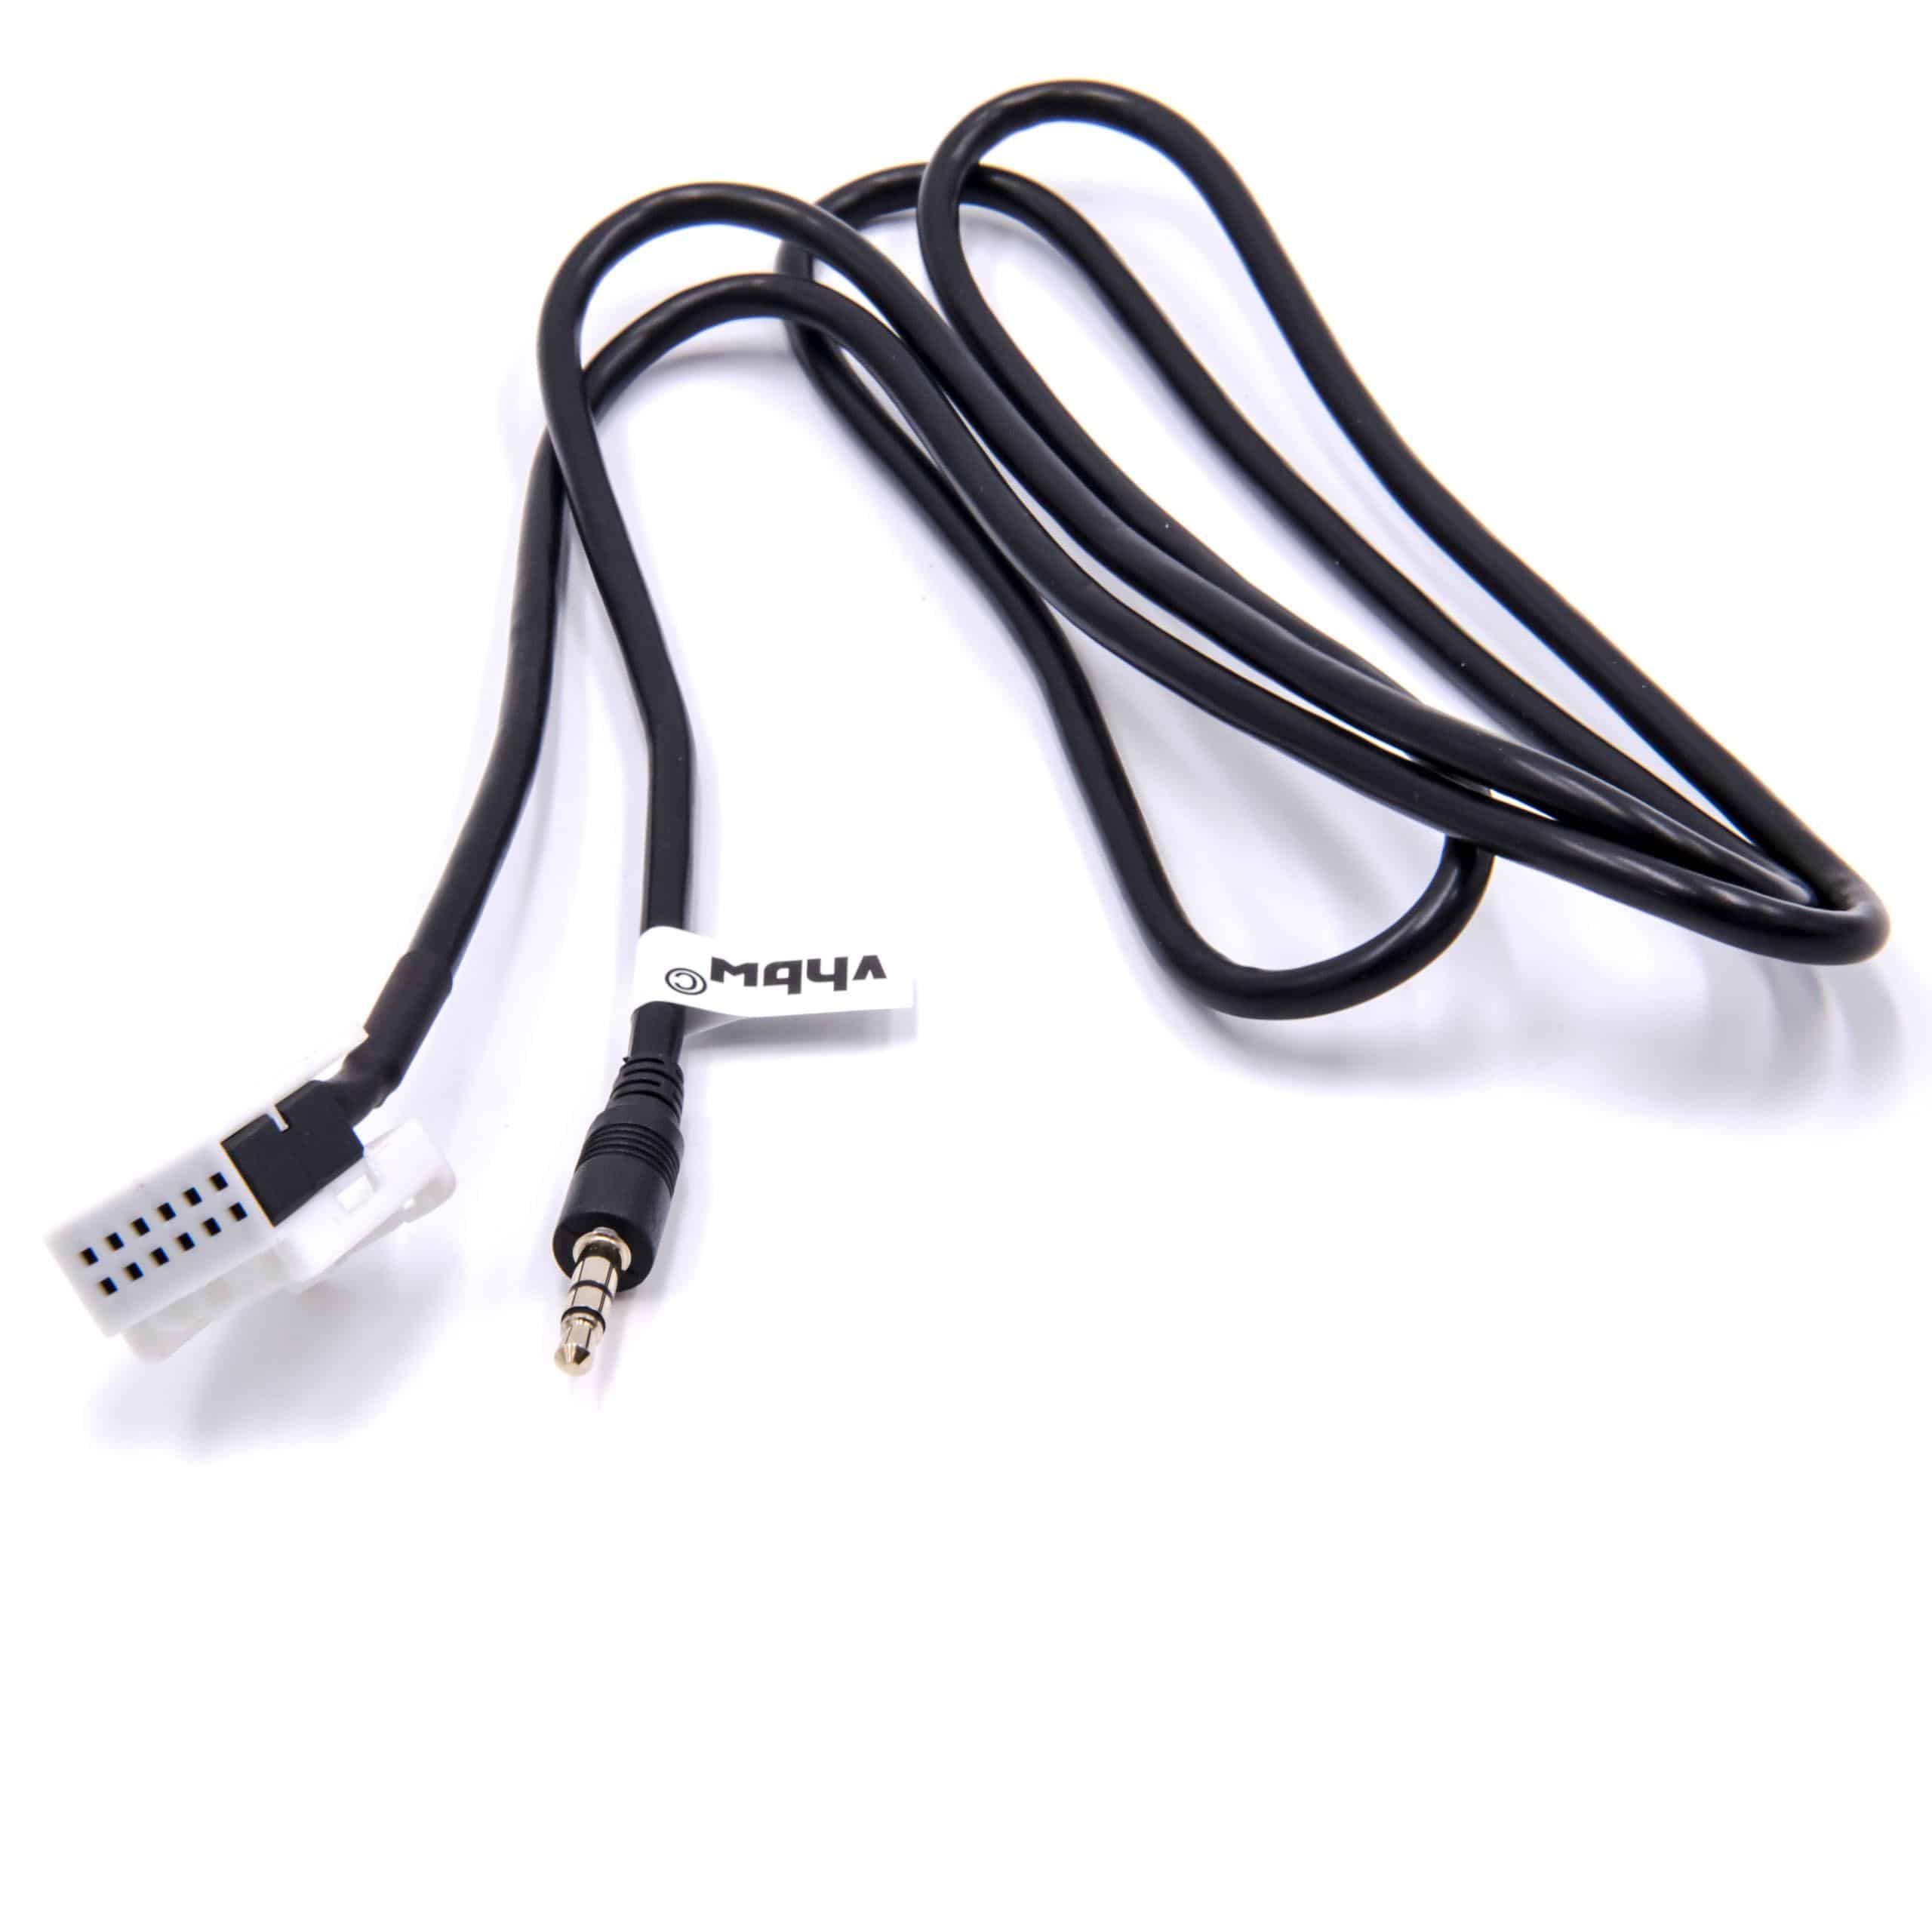 AUX Audio Adapter Cable for Blaupunkt, Citroen, Peugeot RD4 N1 Car Radio etc.